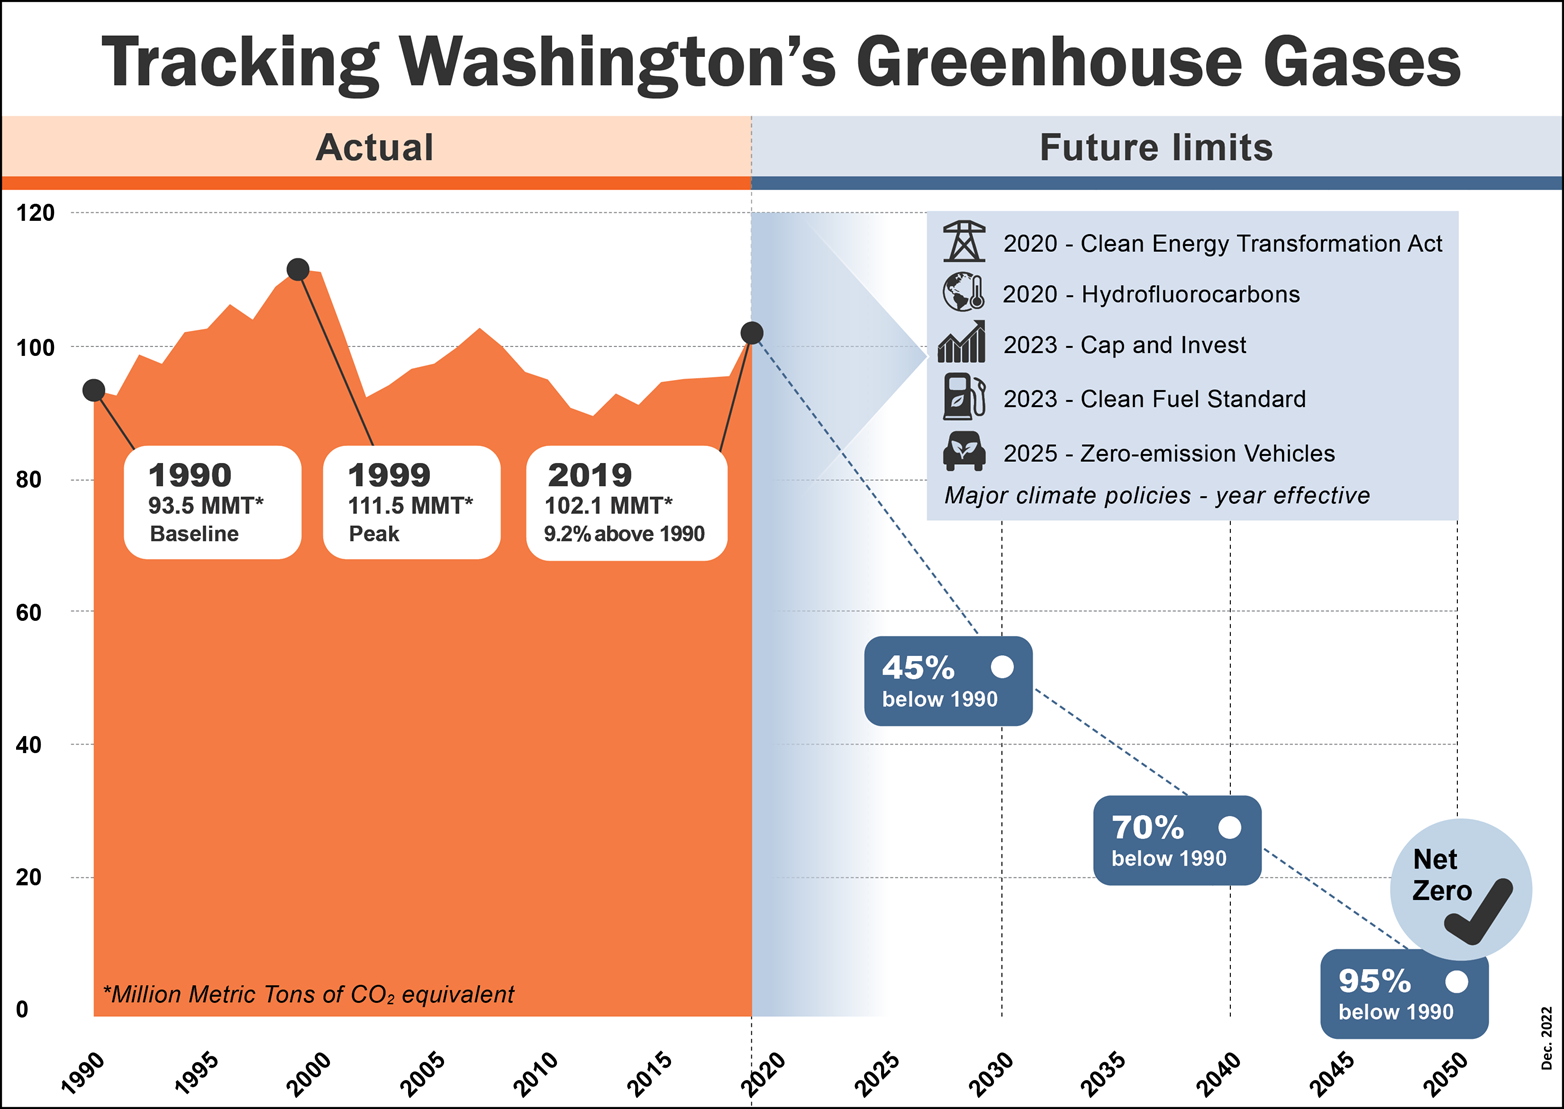 GHG inventories - Washington State Department of Ecology